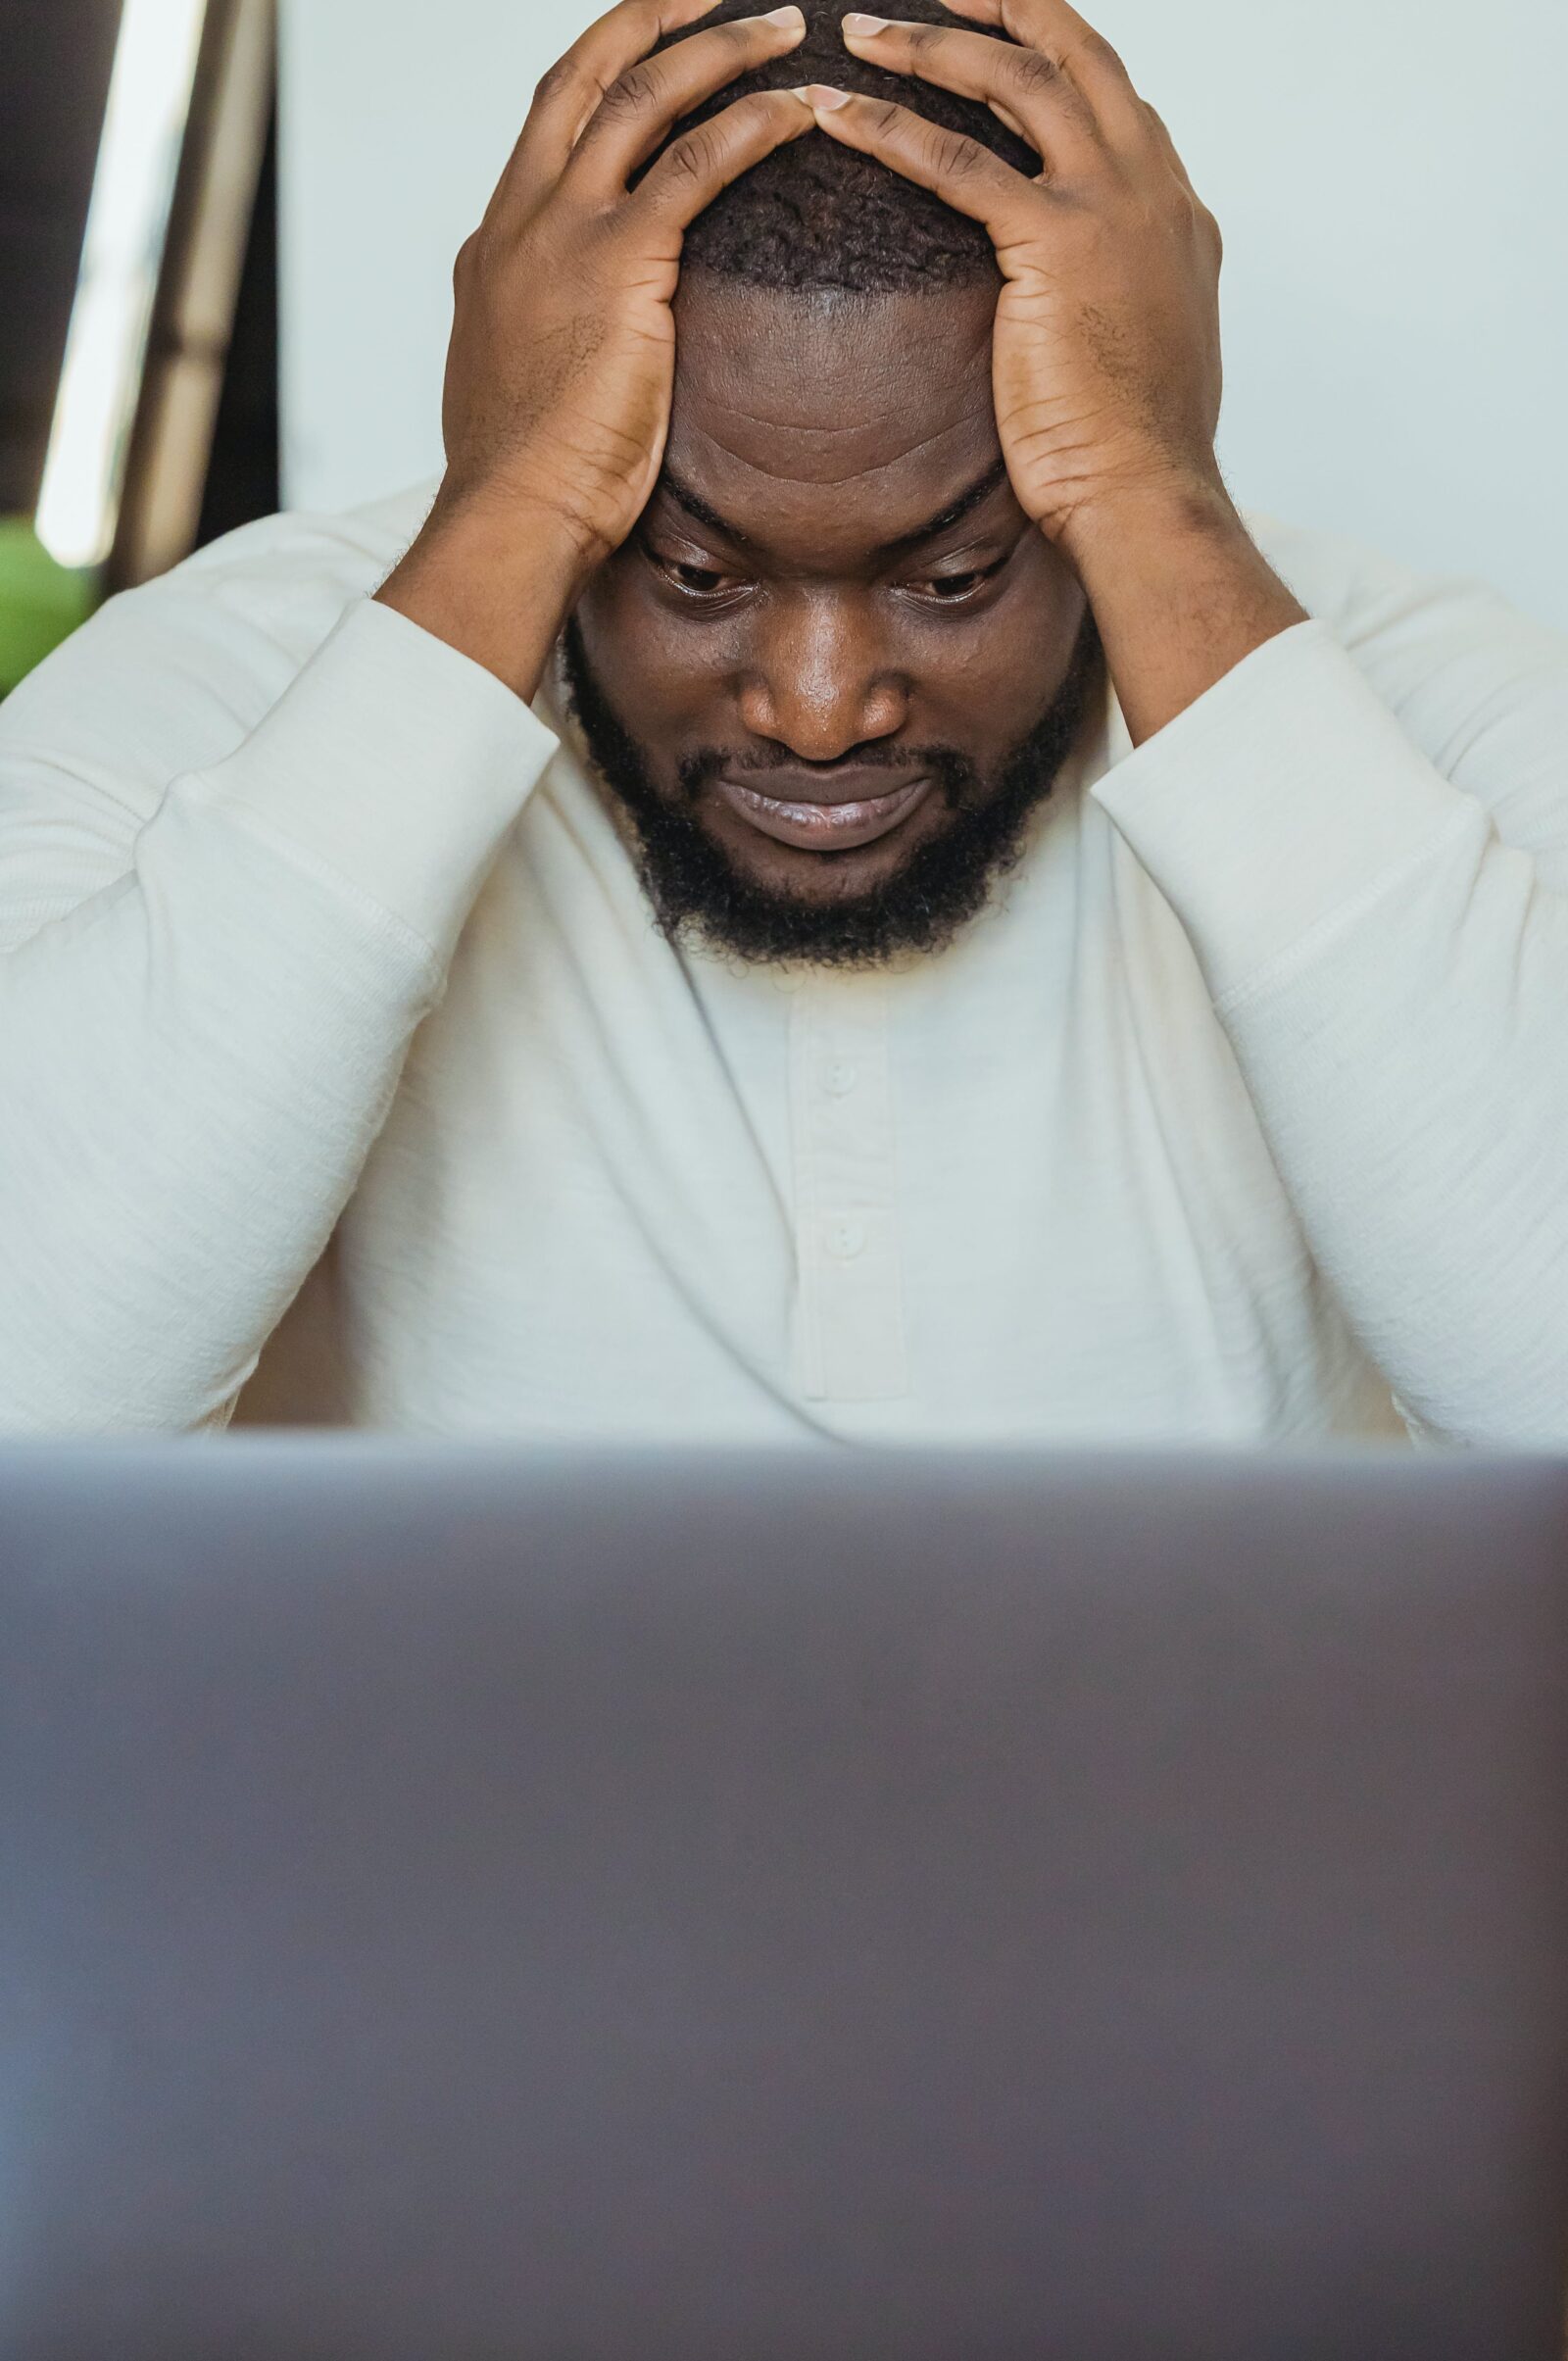 Sad black man with hands on head near laptop